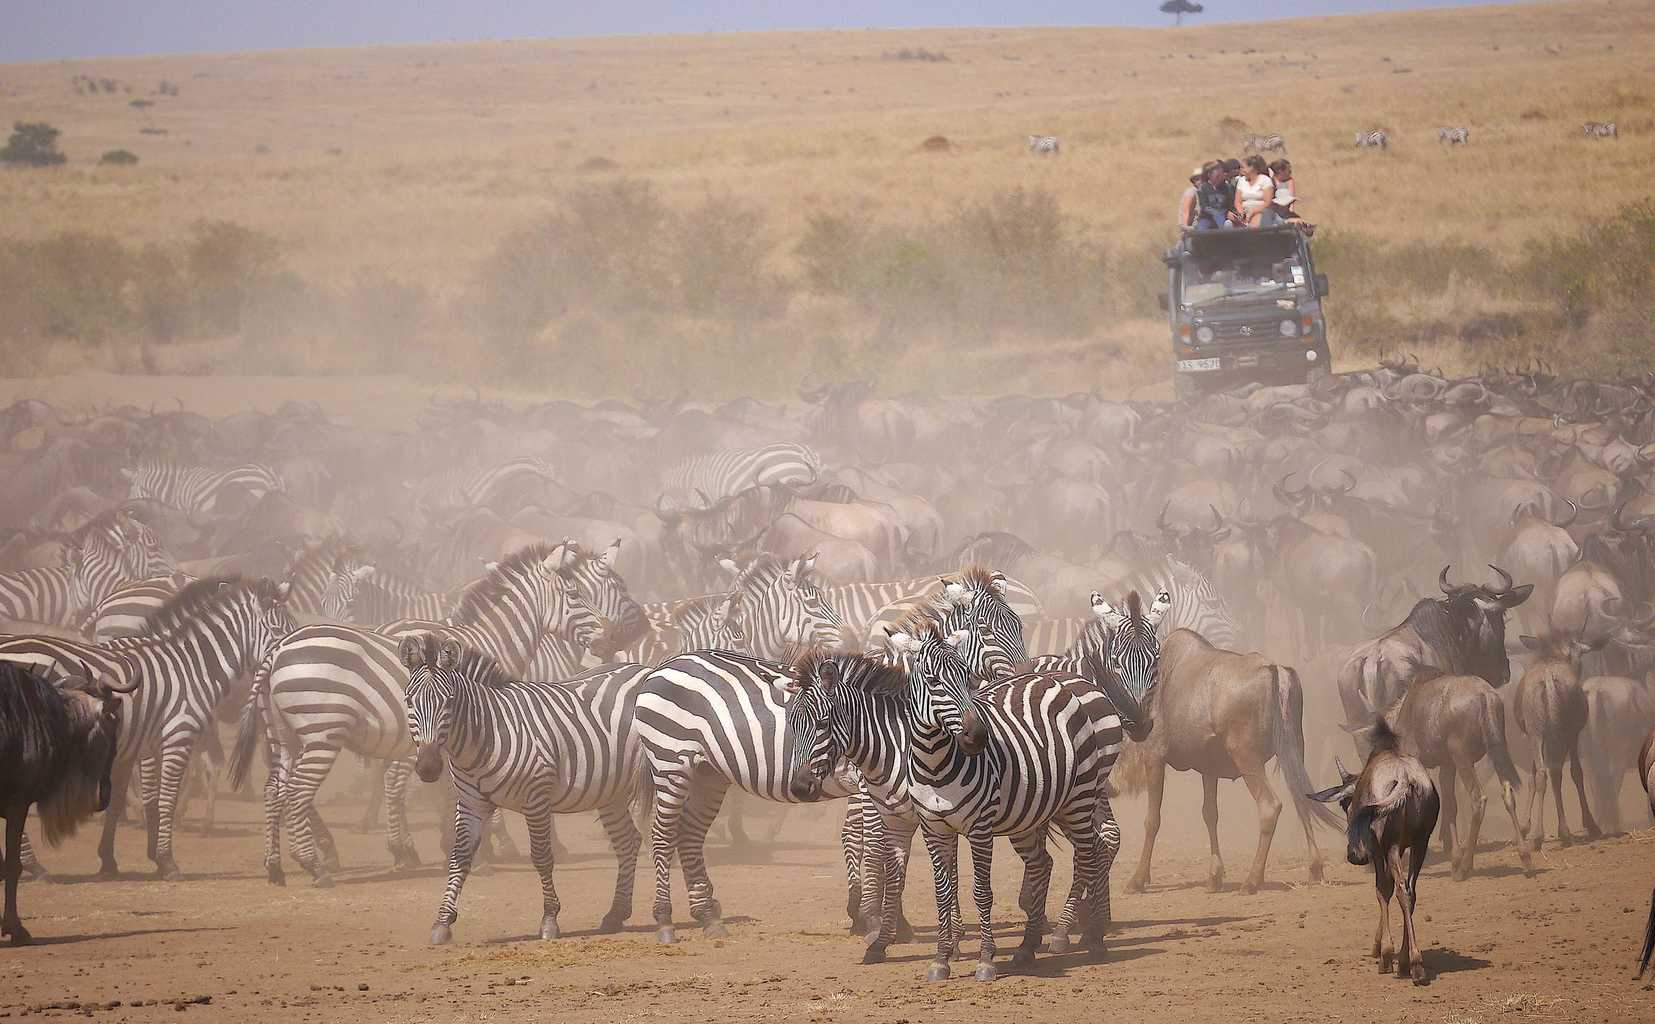 Oldest safari company at Masai Mara